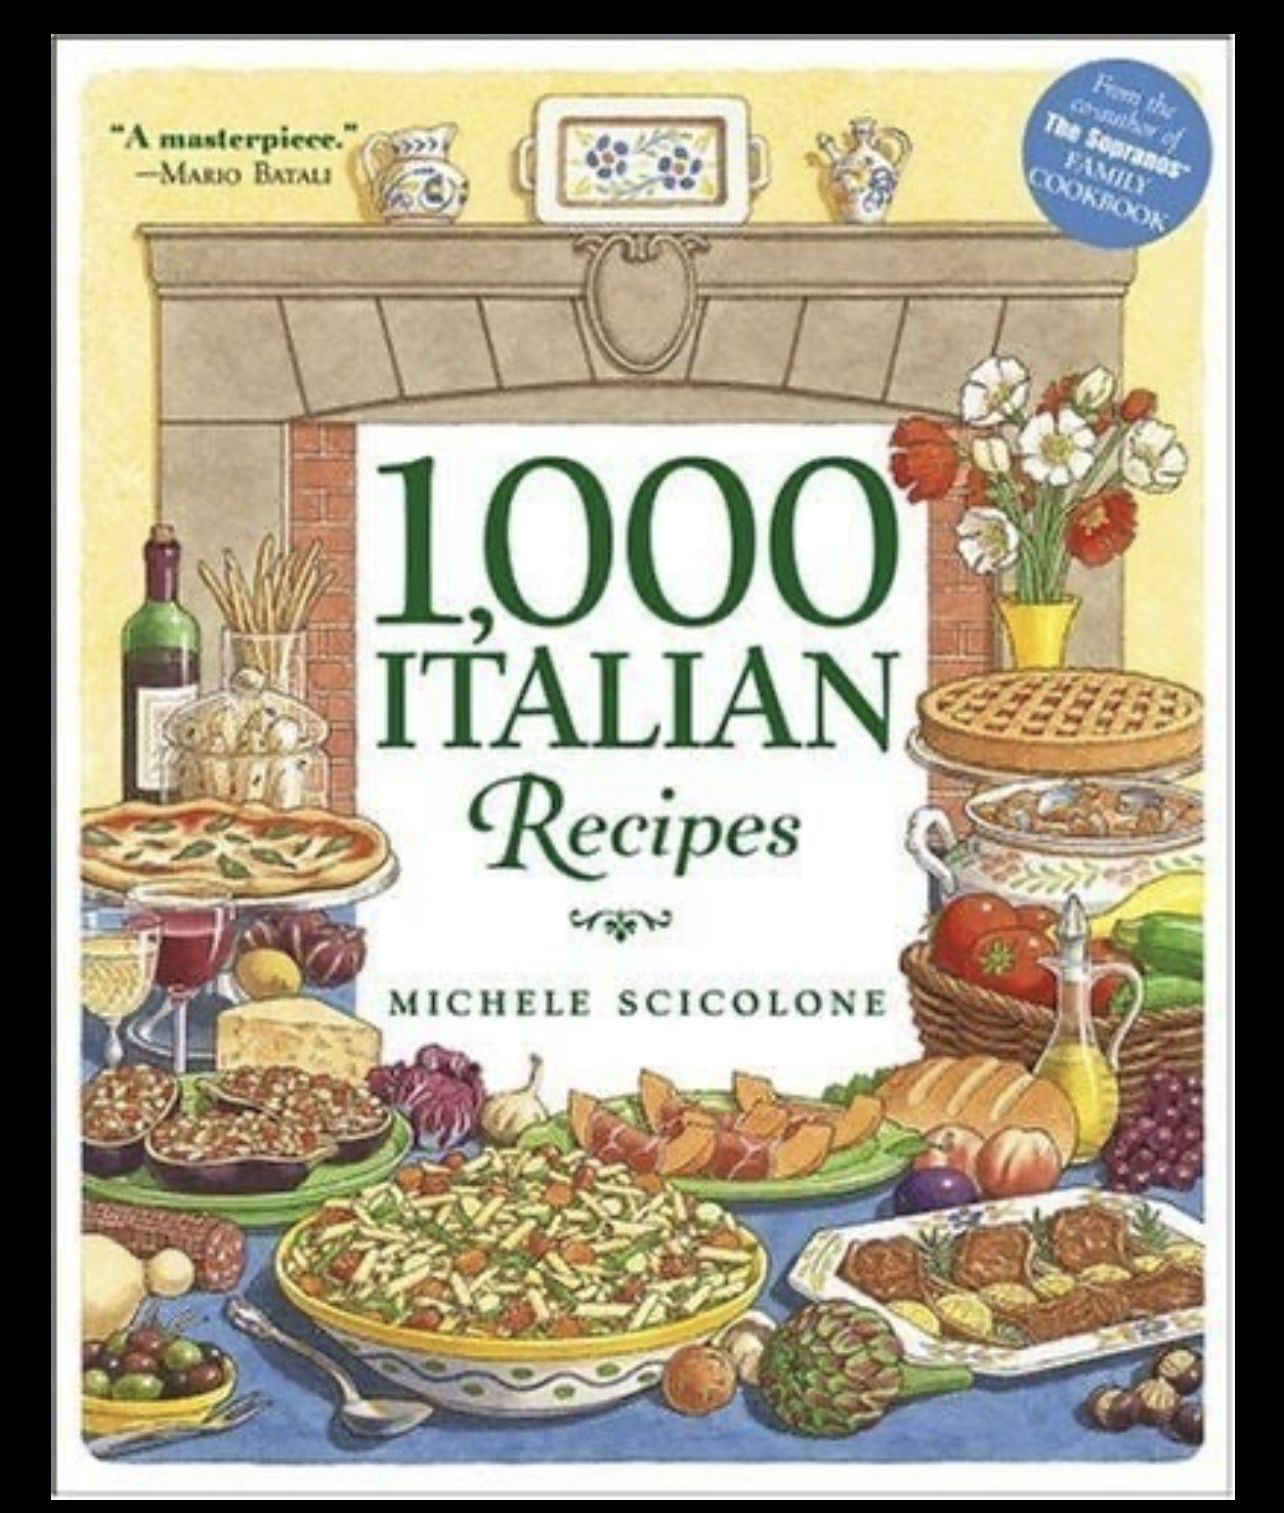 1000 Italian Recipes Cookbook New